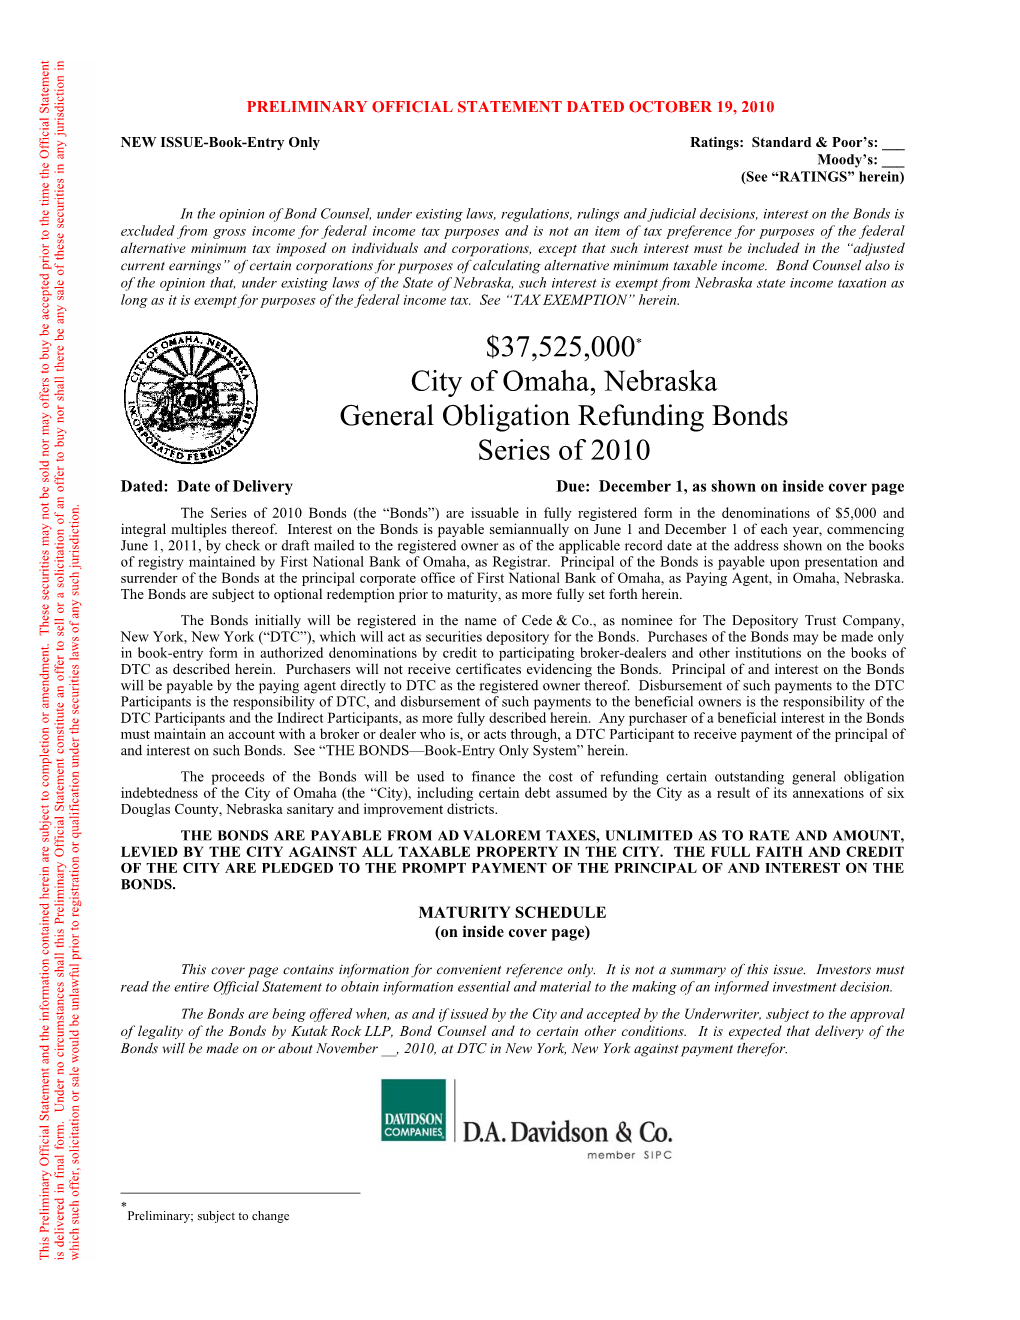 $37,525,000* City of Omaha, Nebraska General Obligation Refunding Bonds Series of 2010